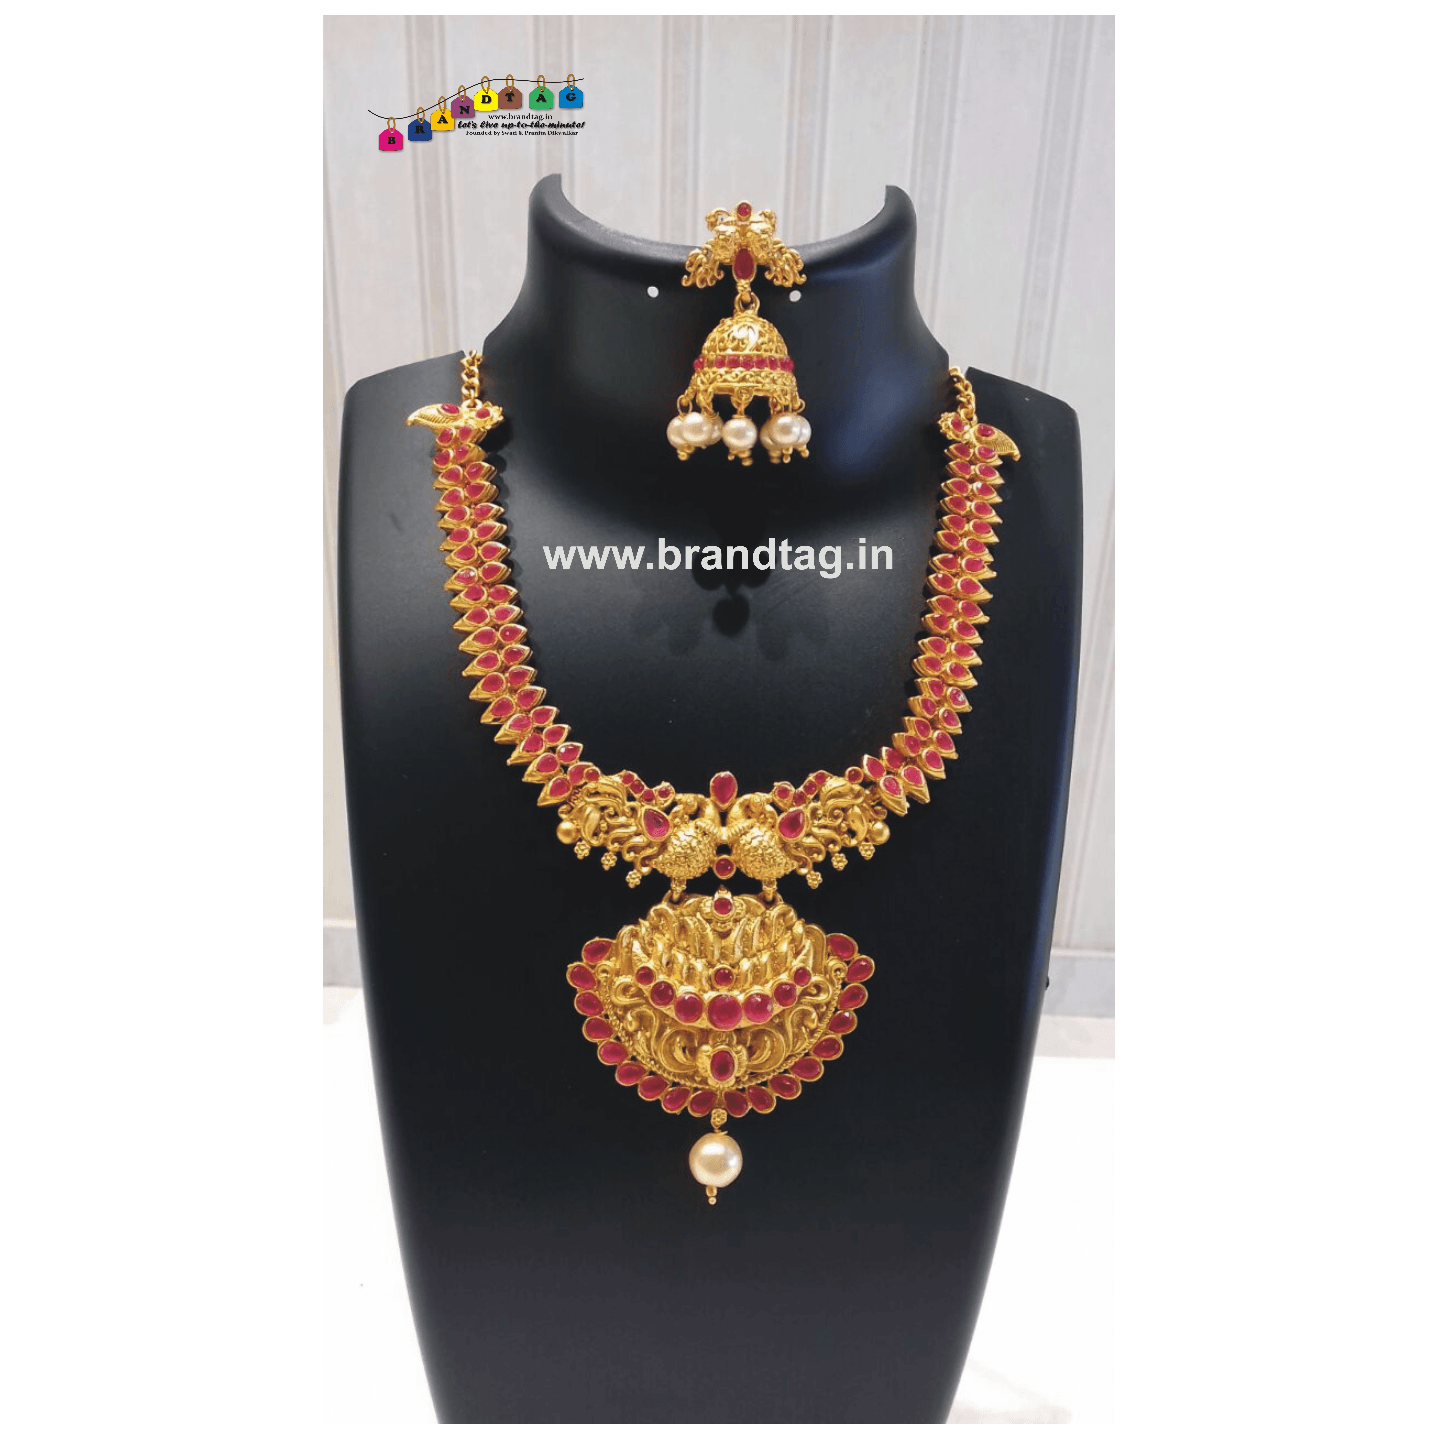 Diwali Collection - Pink Stones studded Golden Necklace Set!